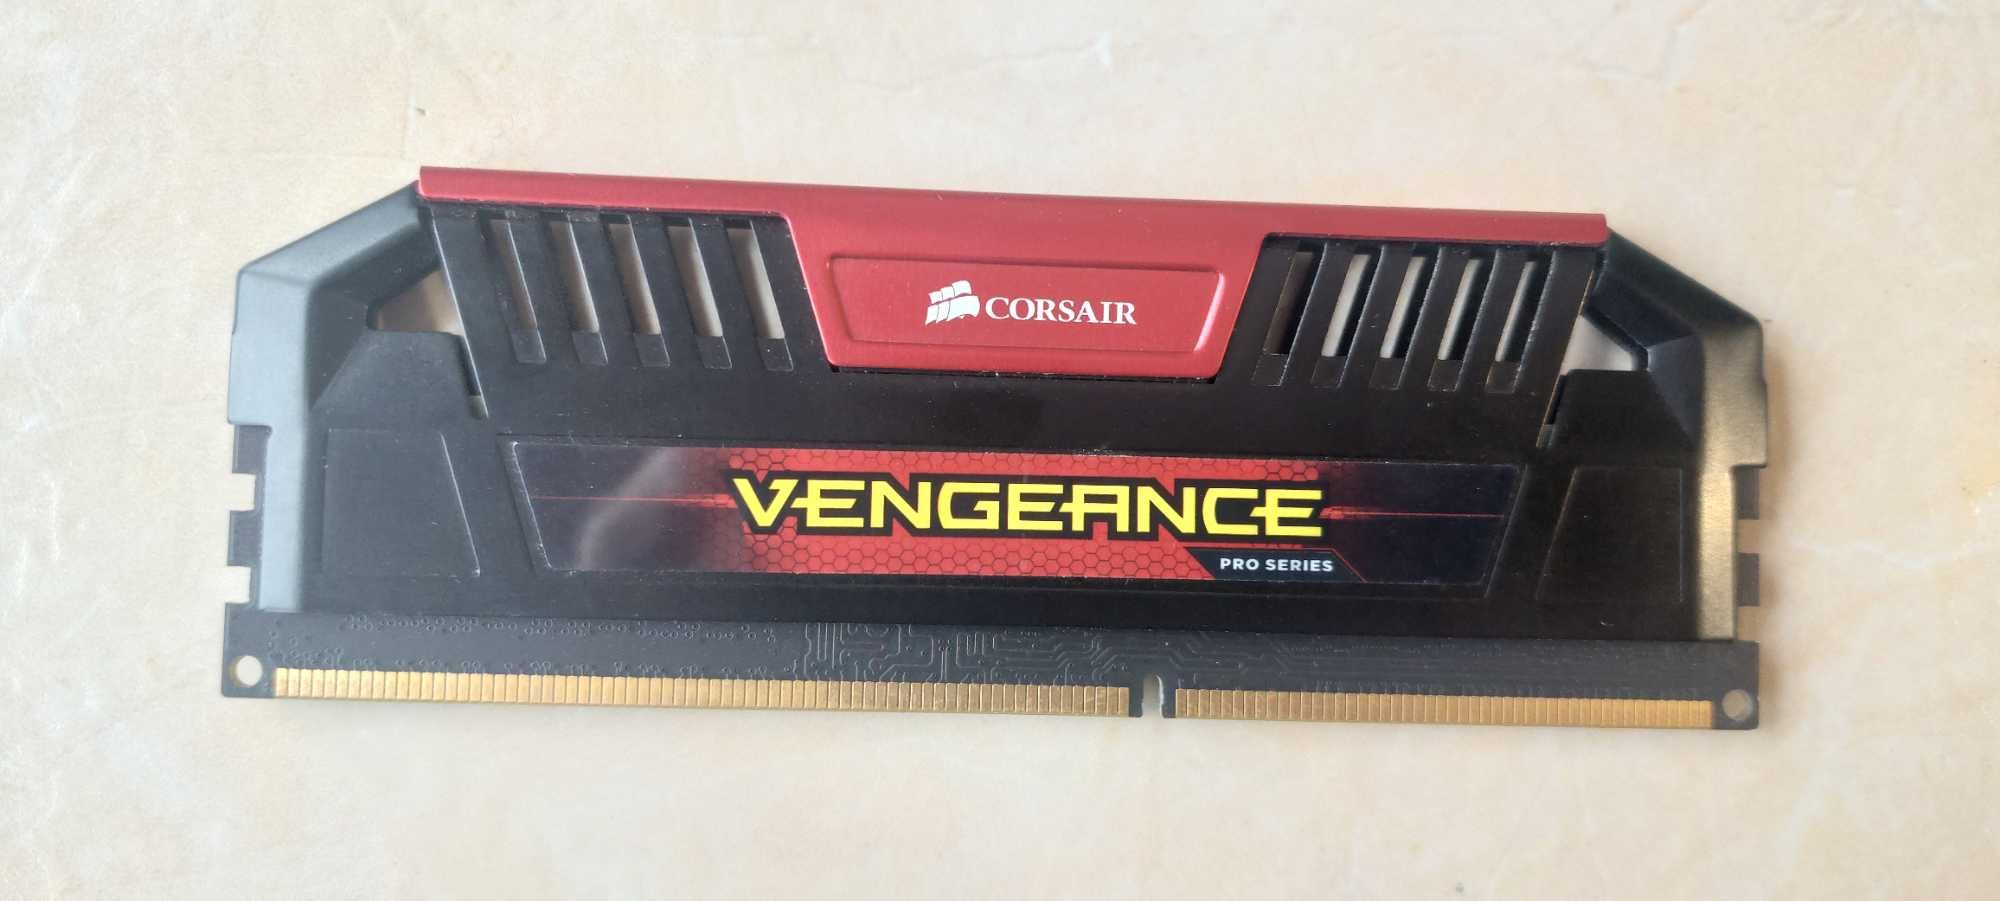 Corsair Vengeance Pro Series 4GB DDR 3 1866mhz